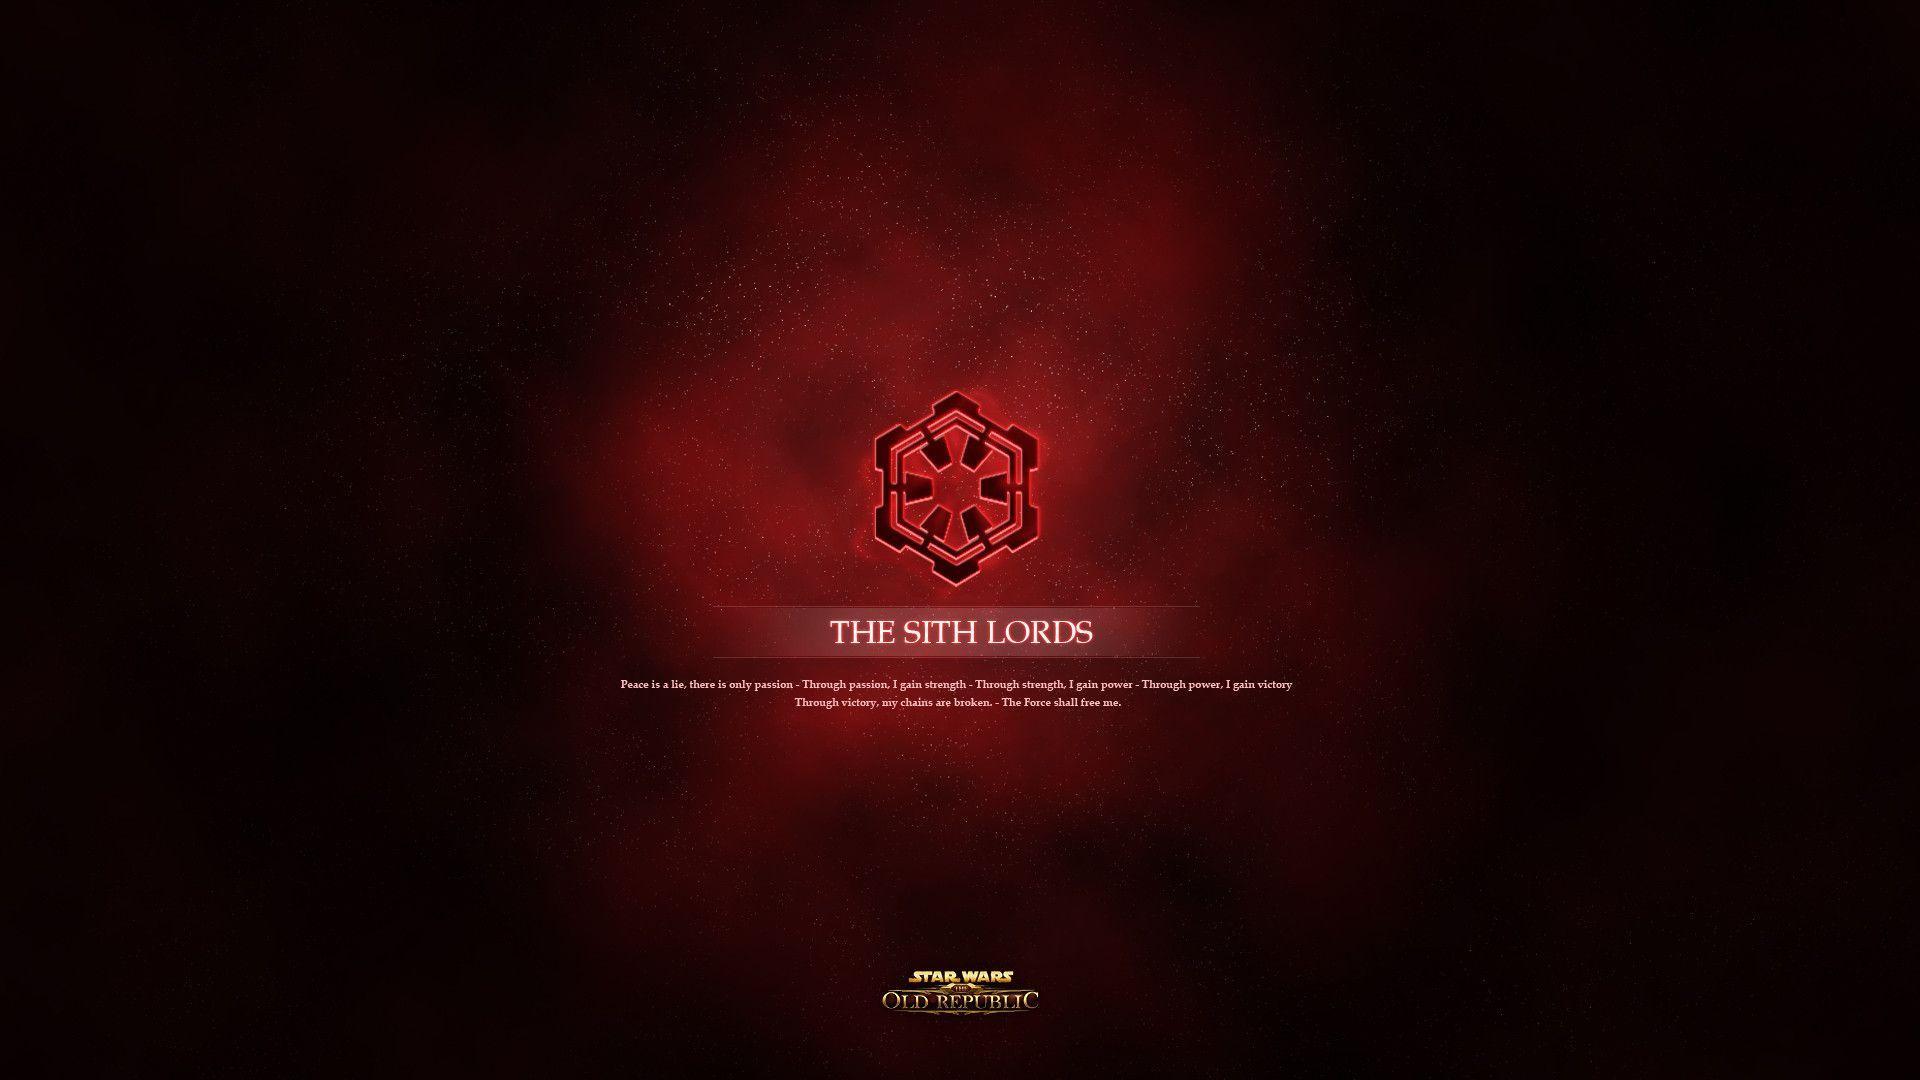 Sith Order Wallpaper